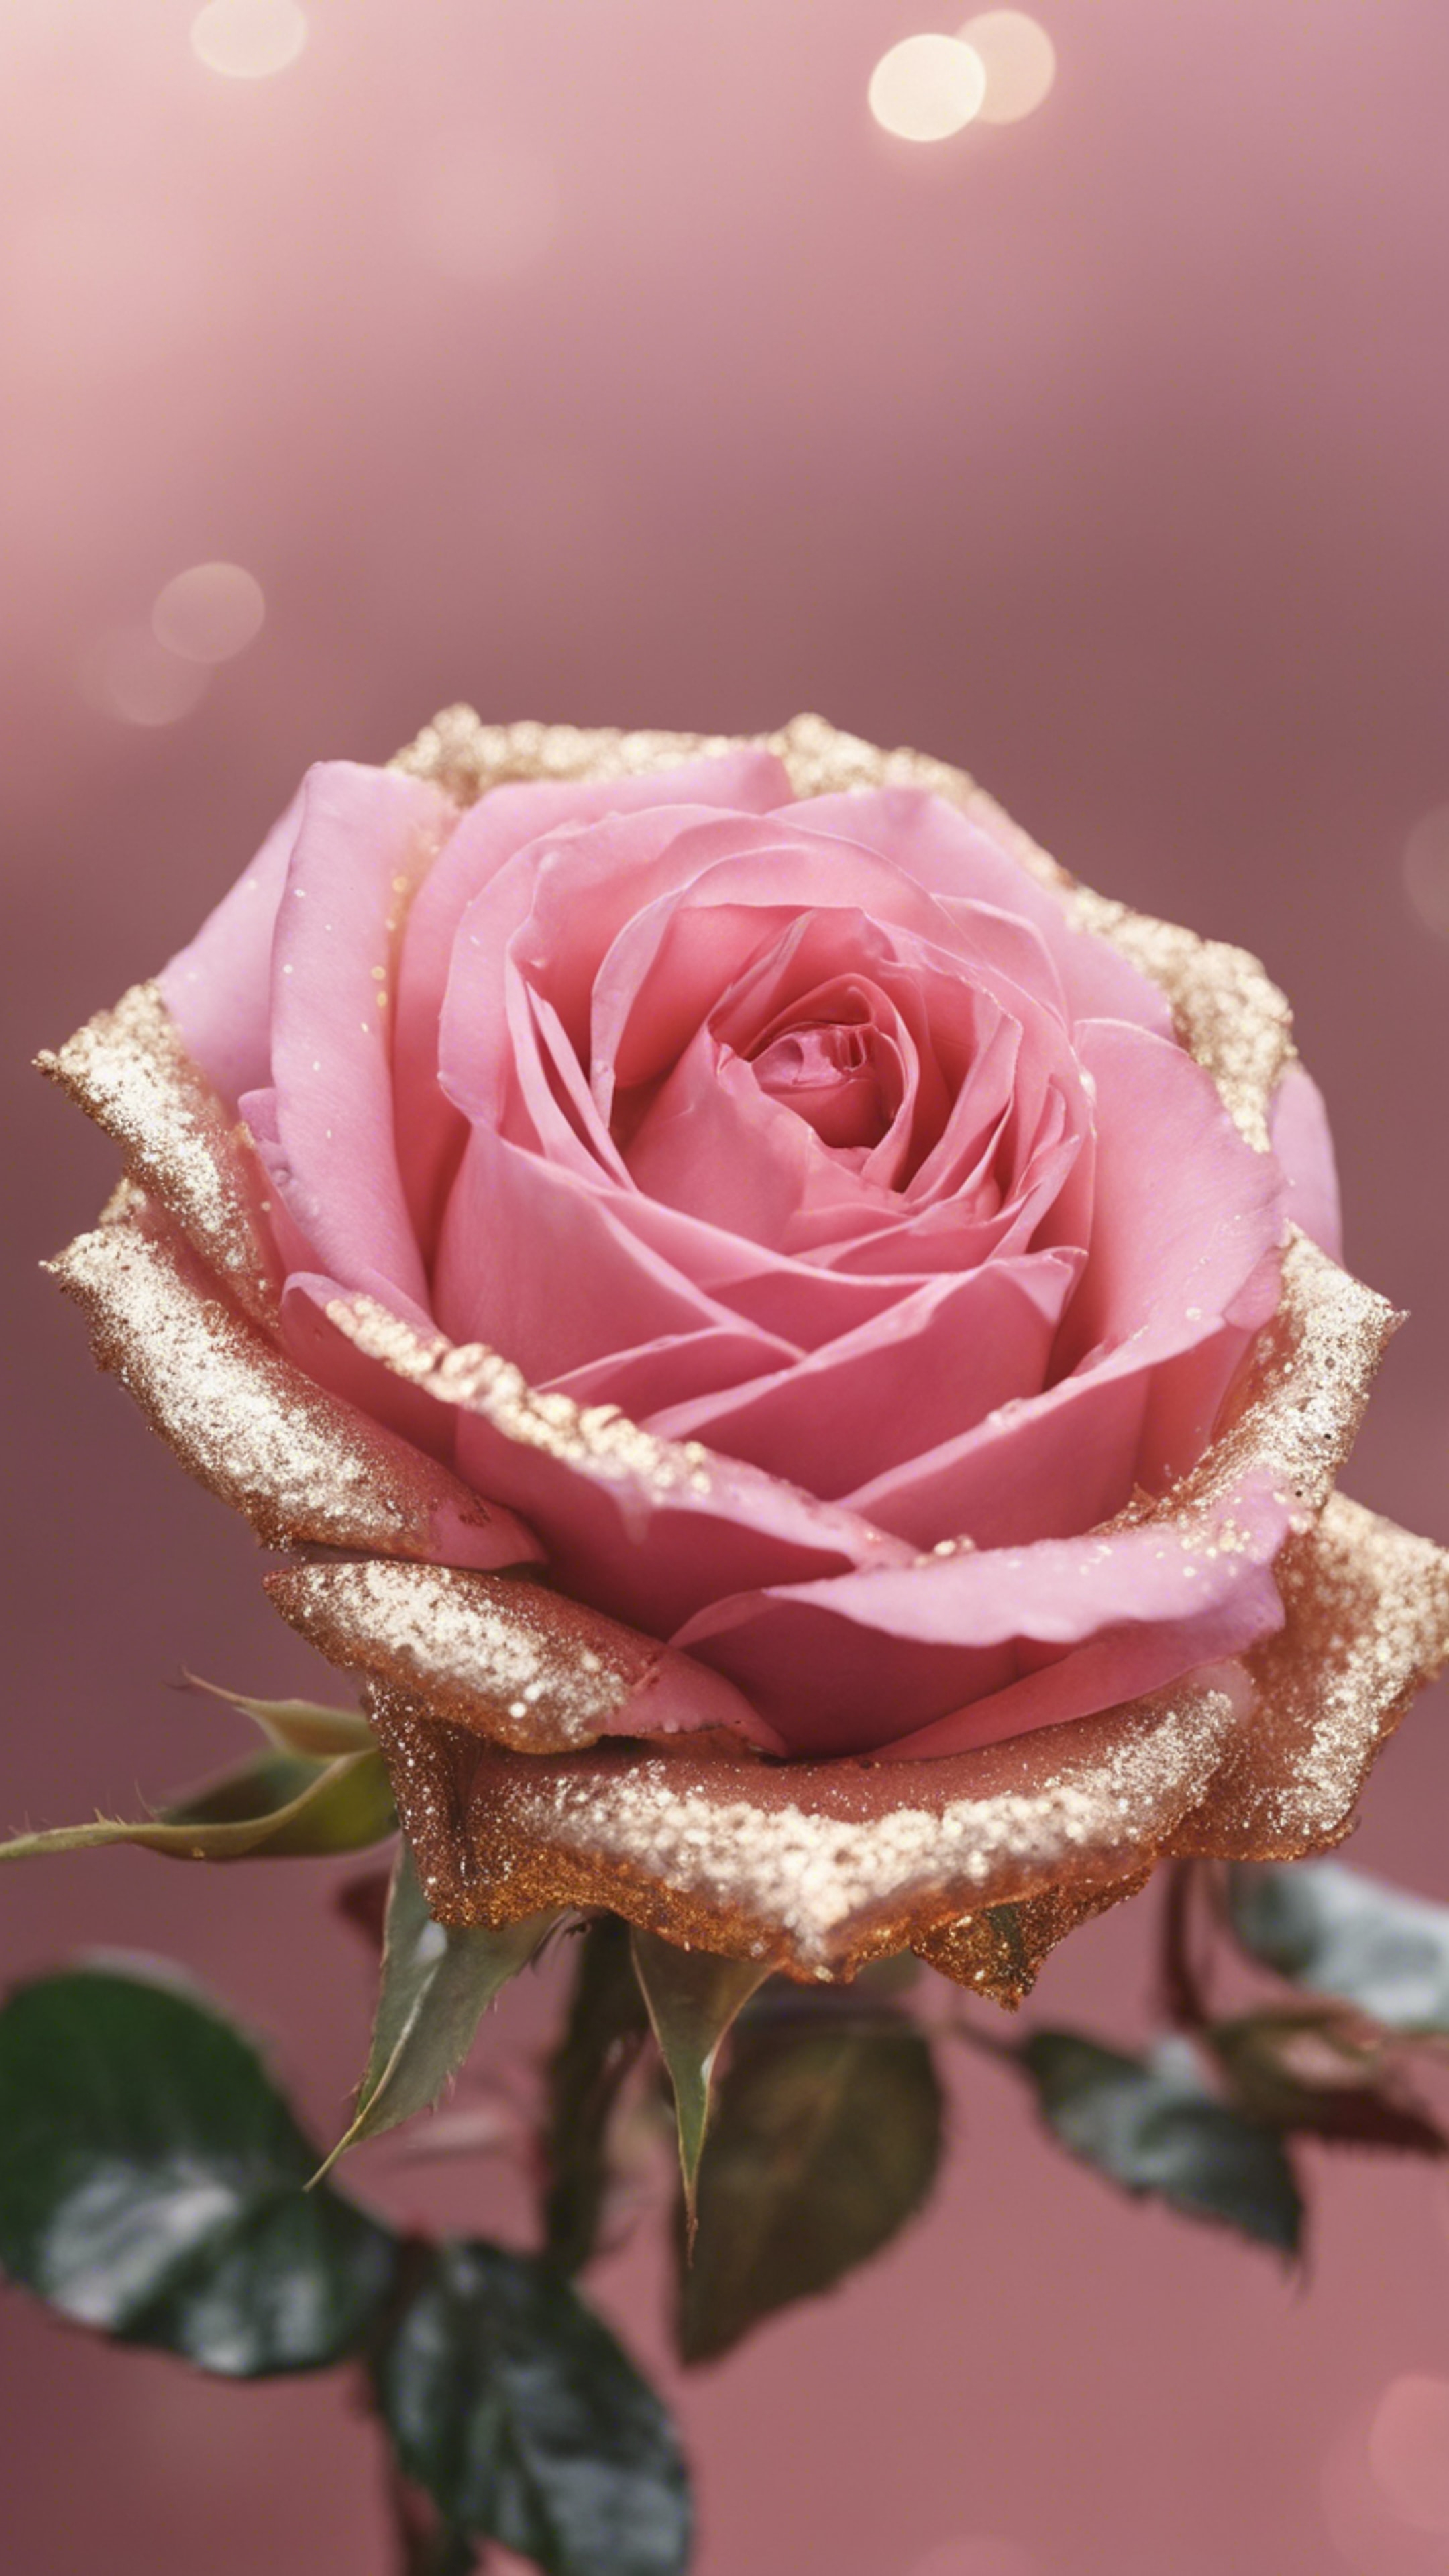 A closeup view of a beautiful pink rose with gold glittered edges. Tapet[3875274ebd404c0da9bb]